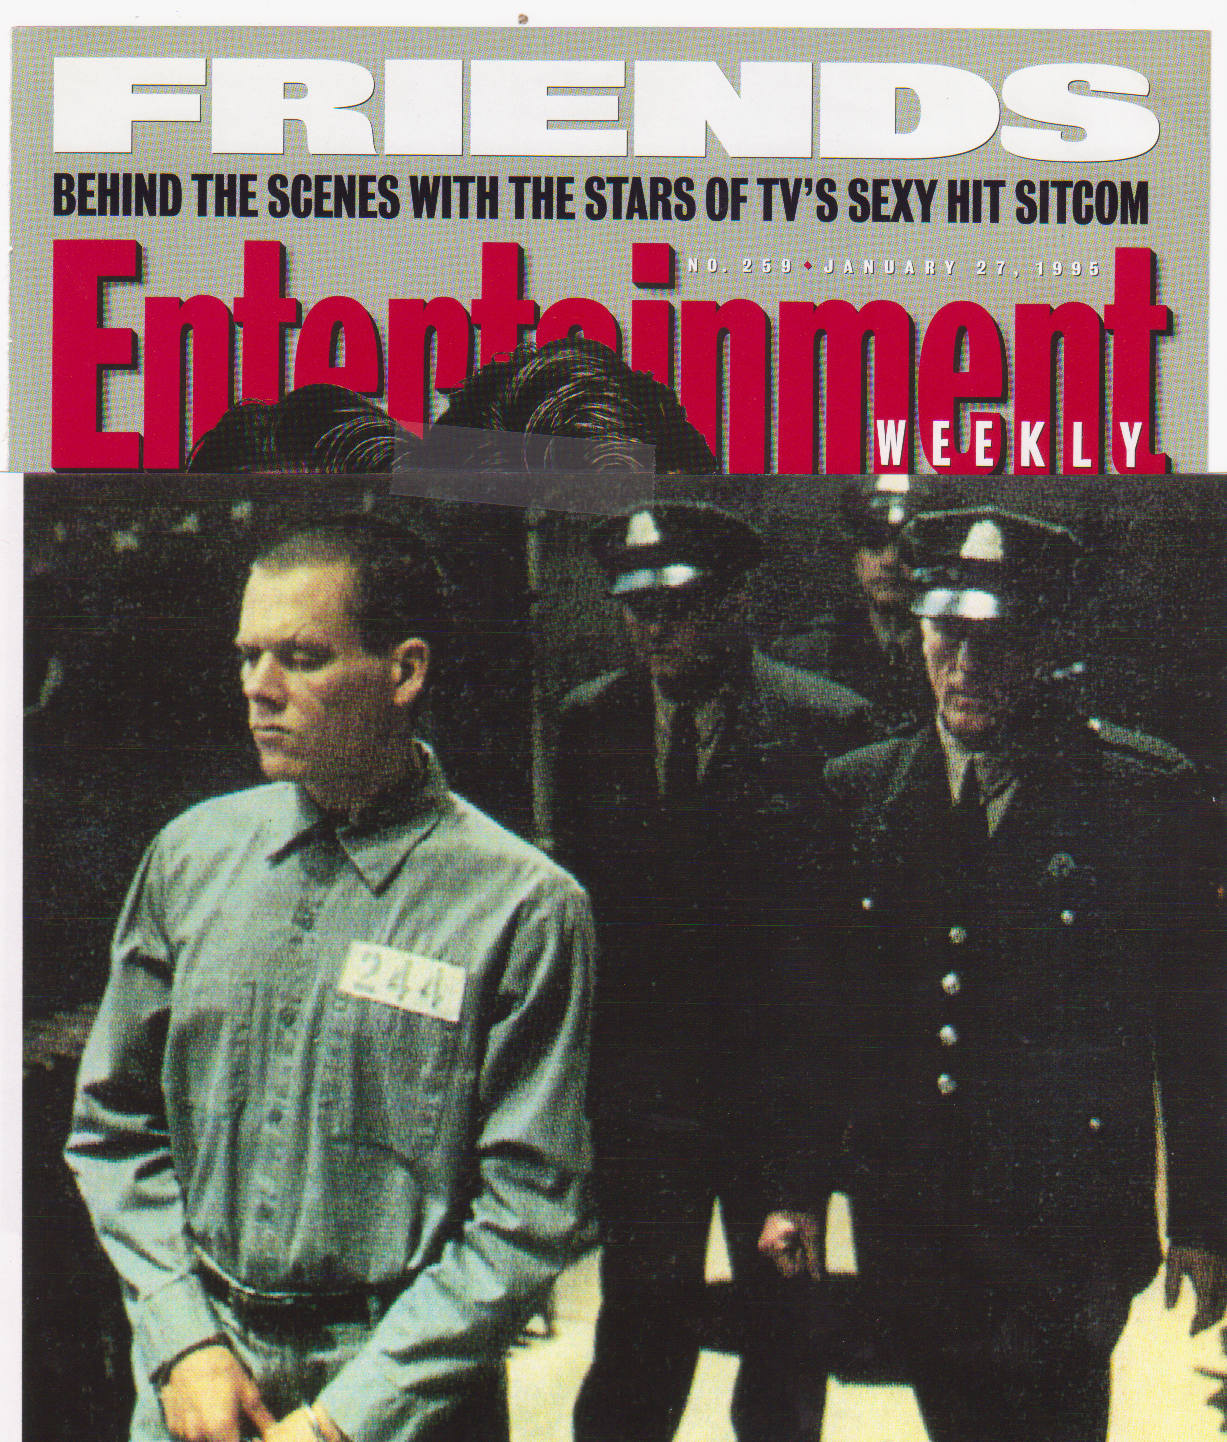 James as policeman - The magazine cover